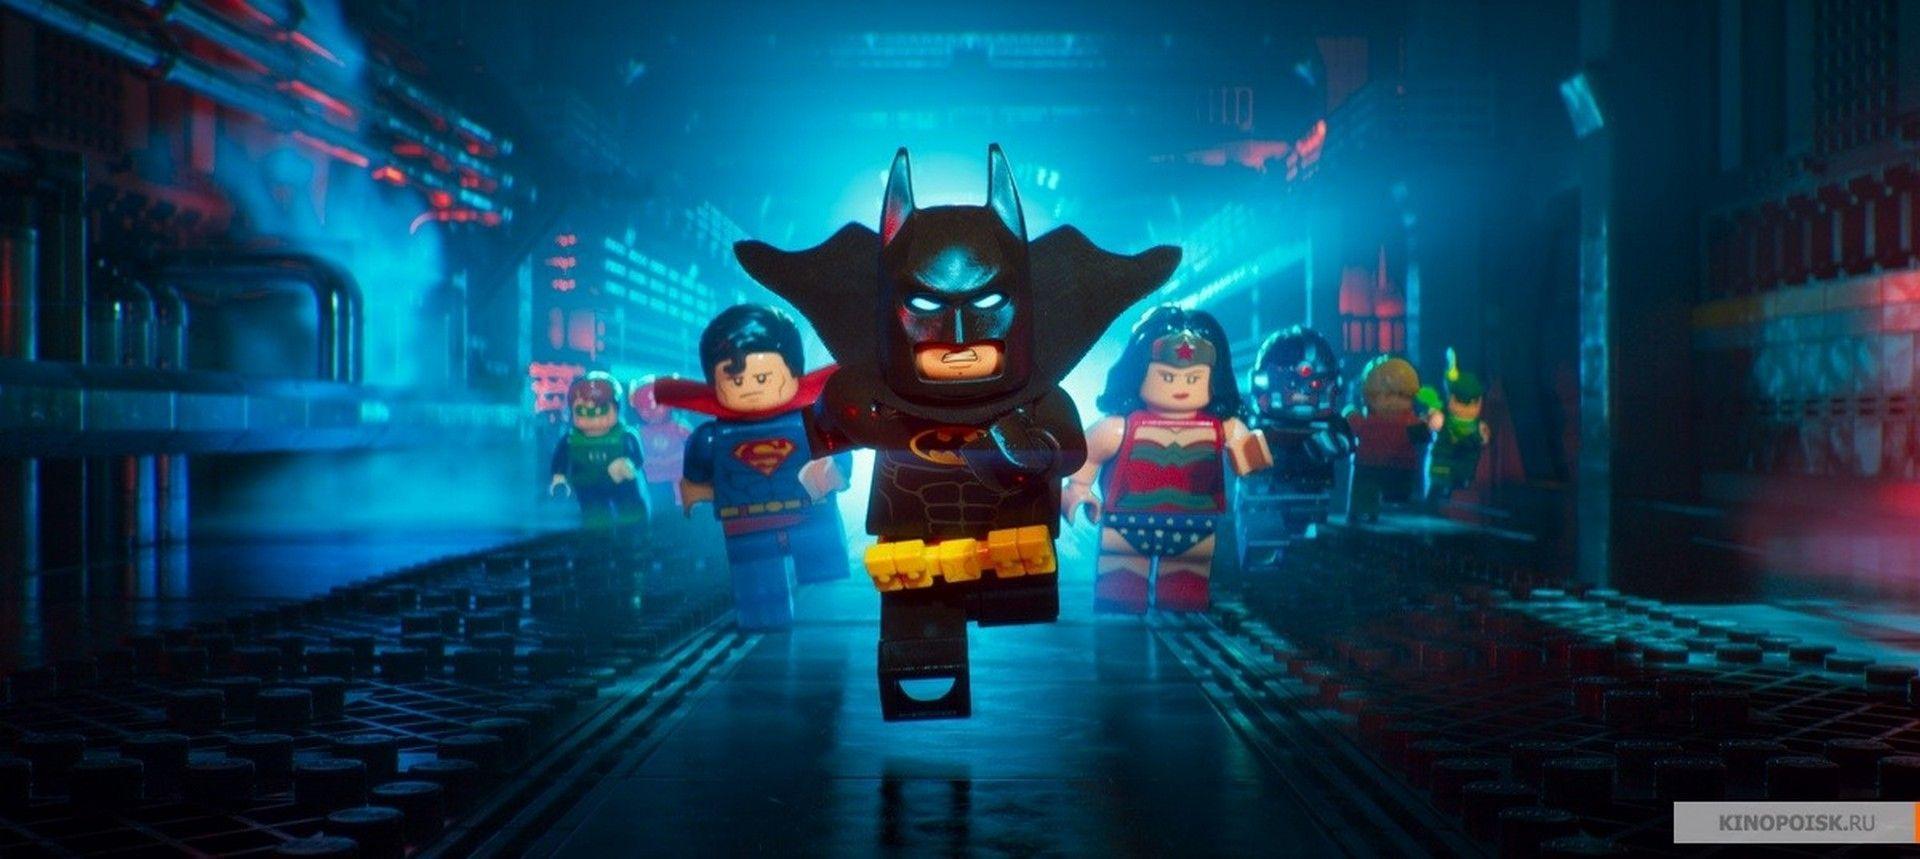 HD The LEGO Batman Movie wallpaper. The LEGO Batman Movie